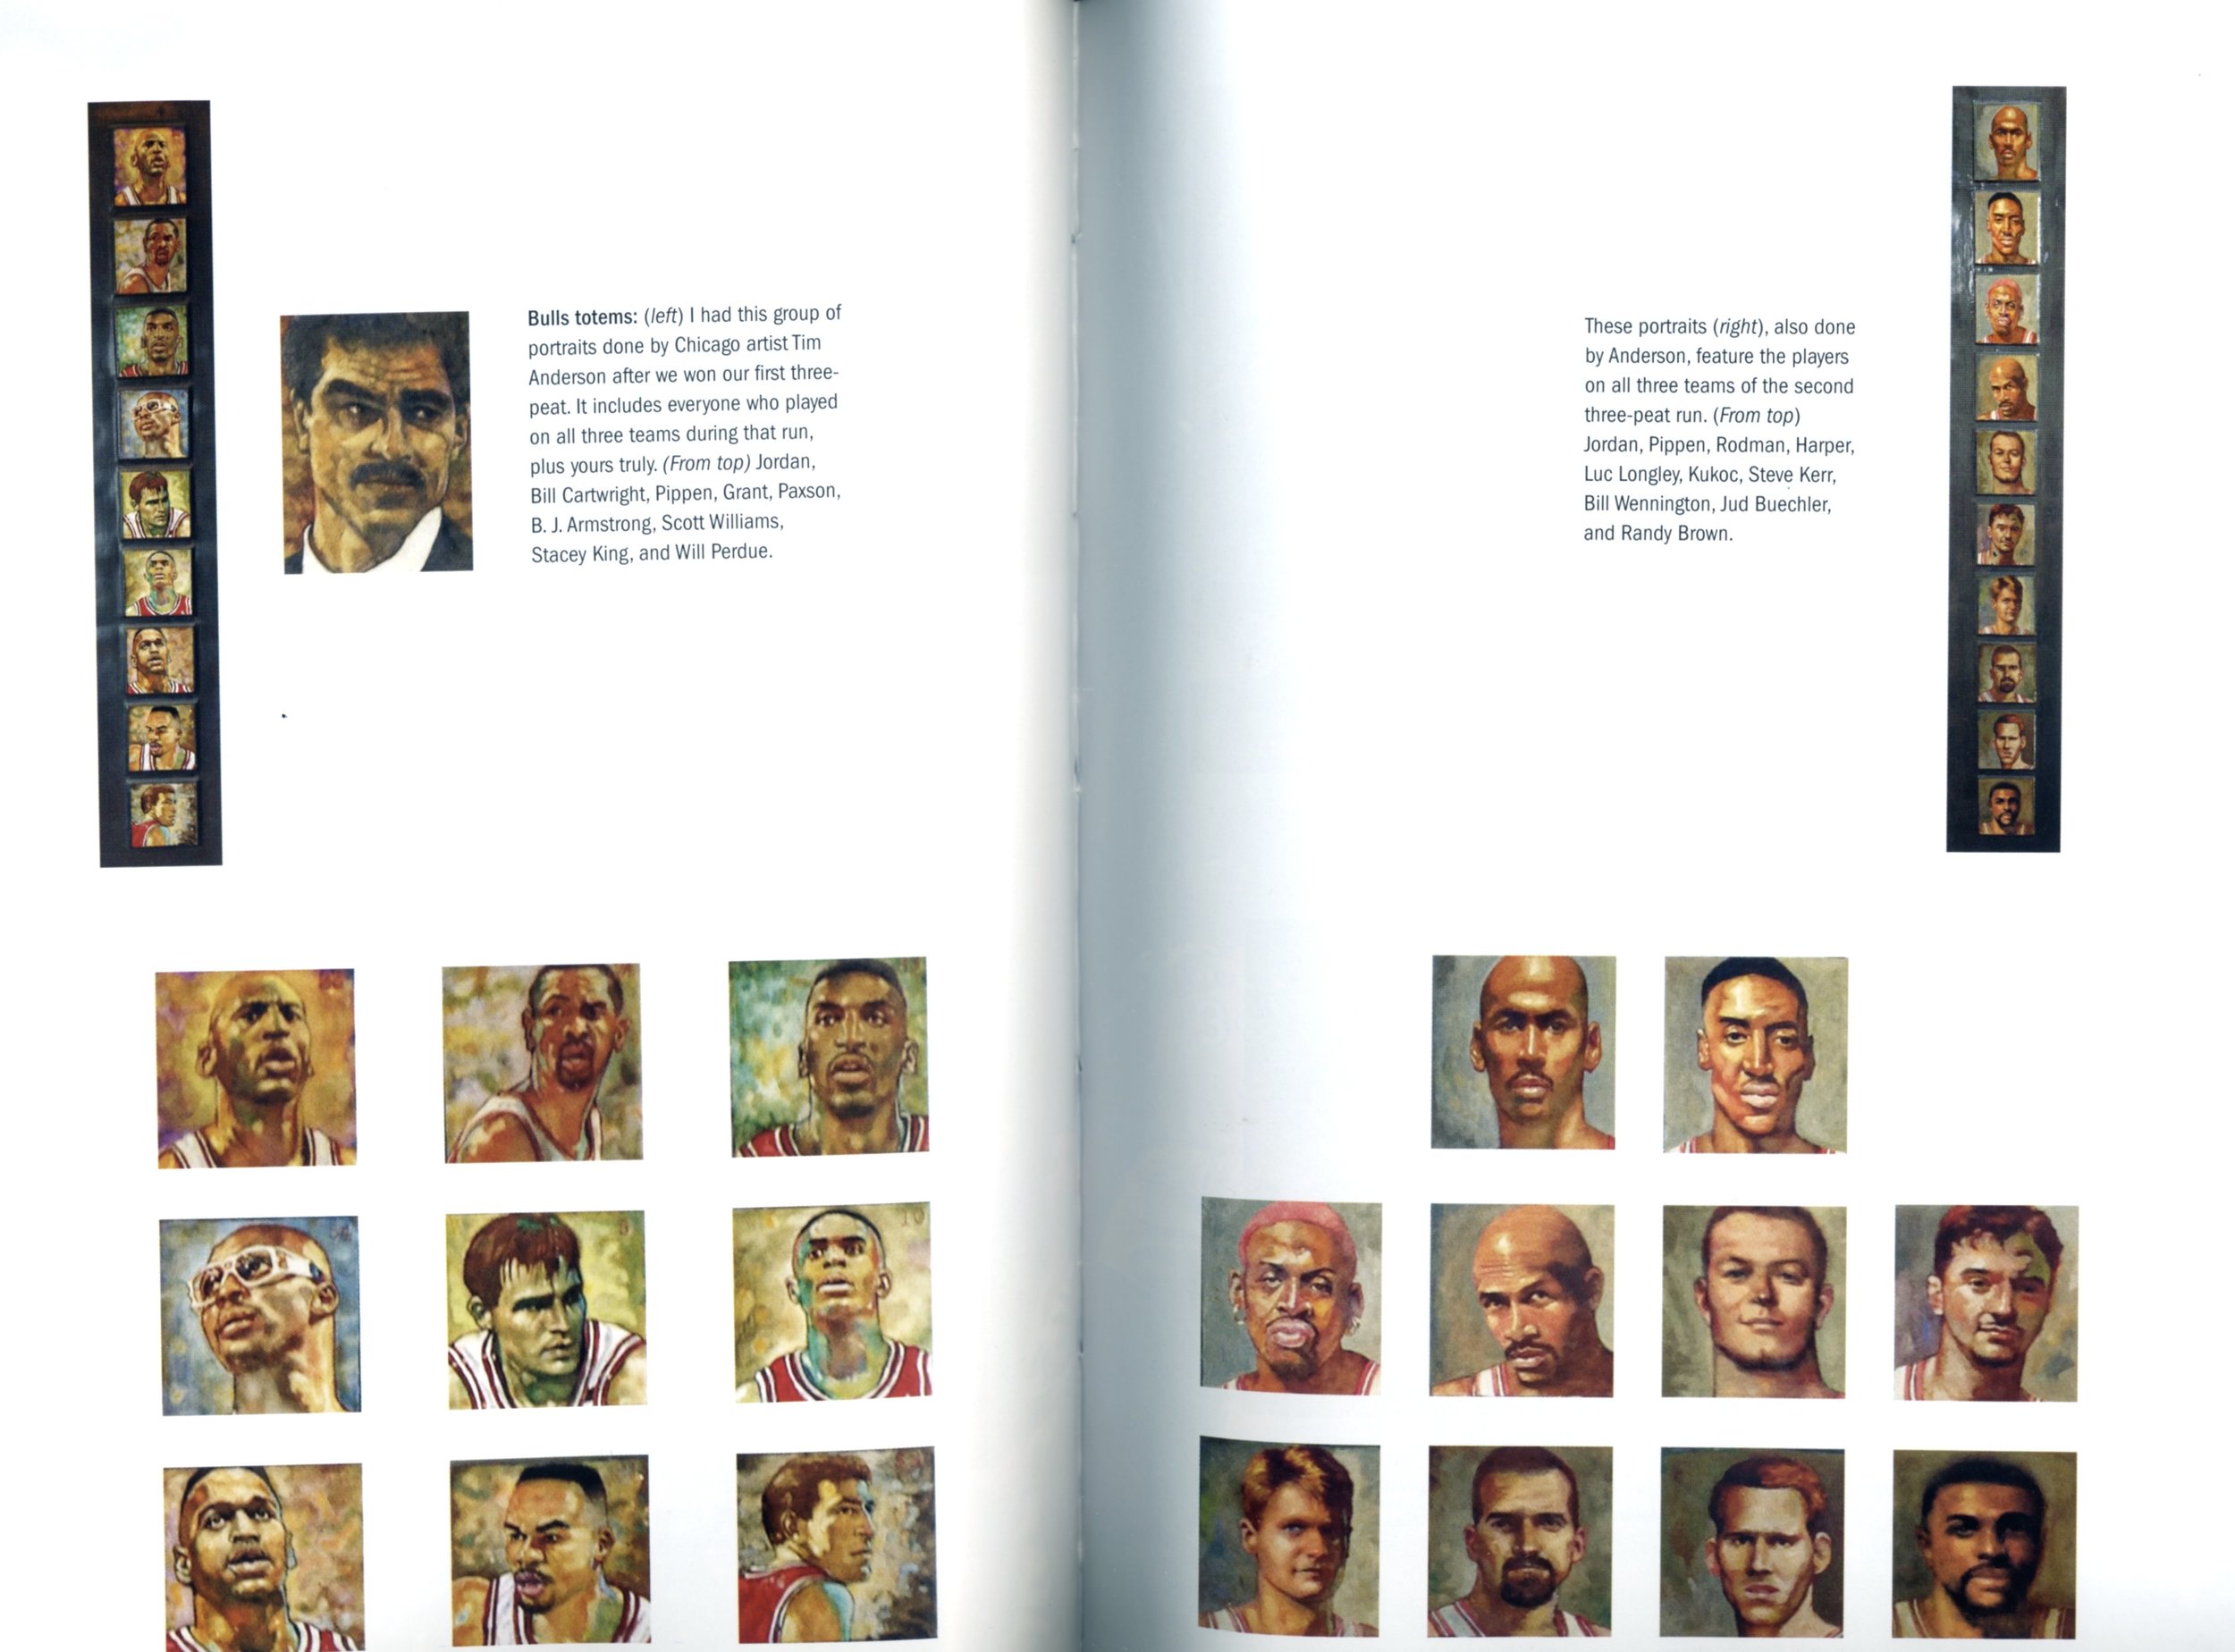 Tim Anderson Bulls portraits in Phil Jackson's book  2.jpeg